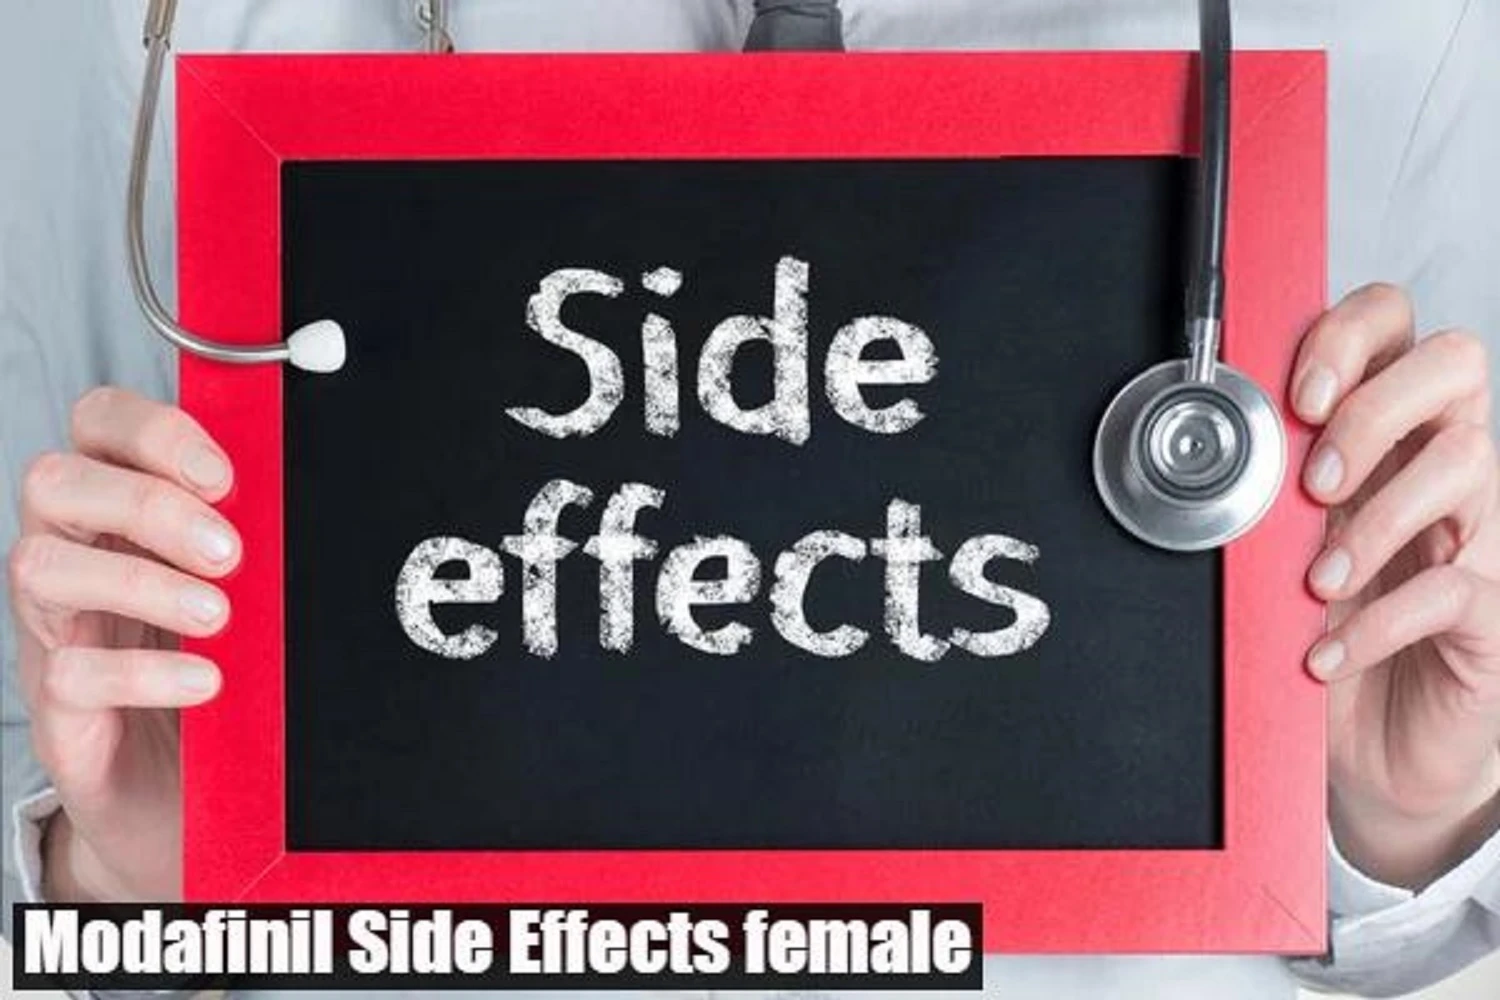 Modafinil Side Effects female